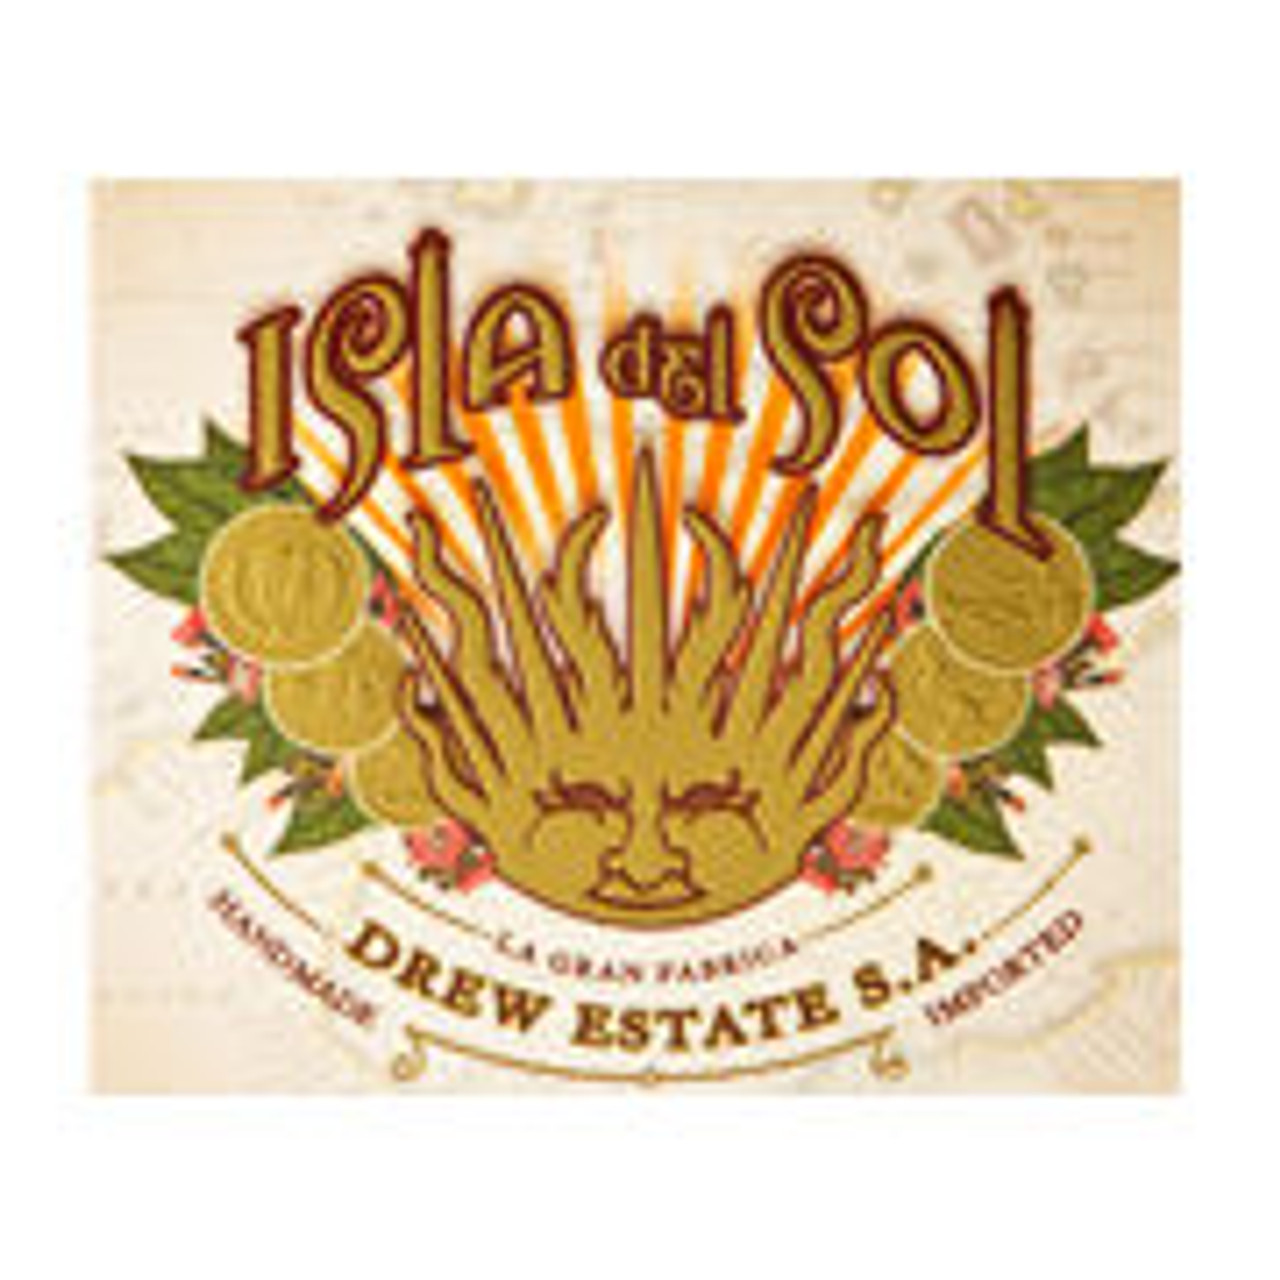 Isla del Sol Logo